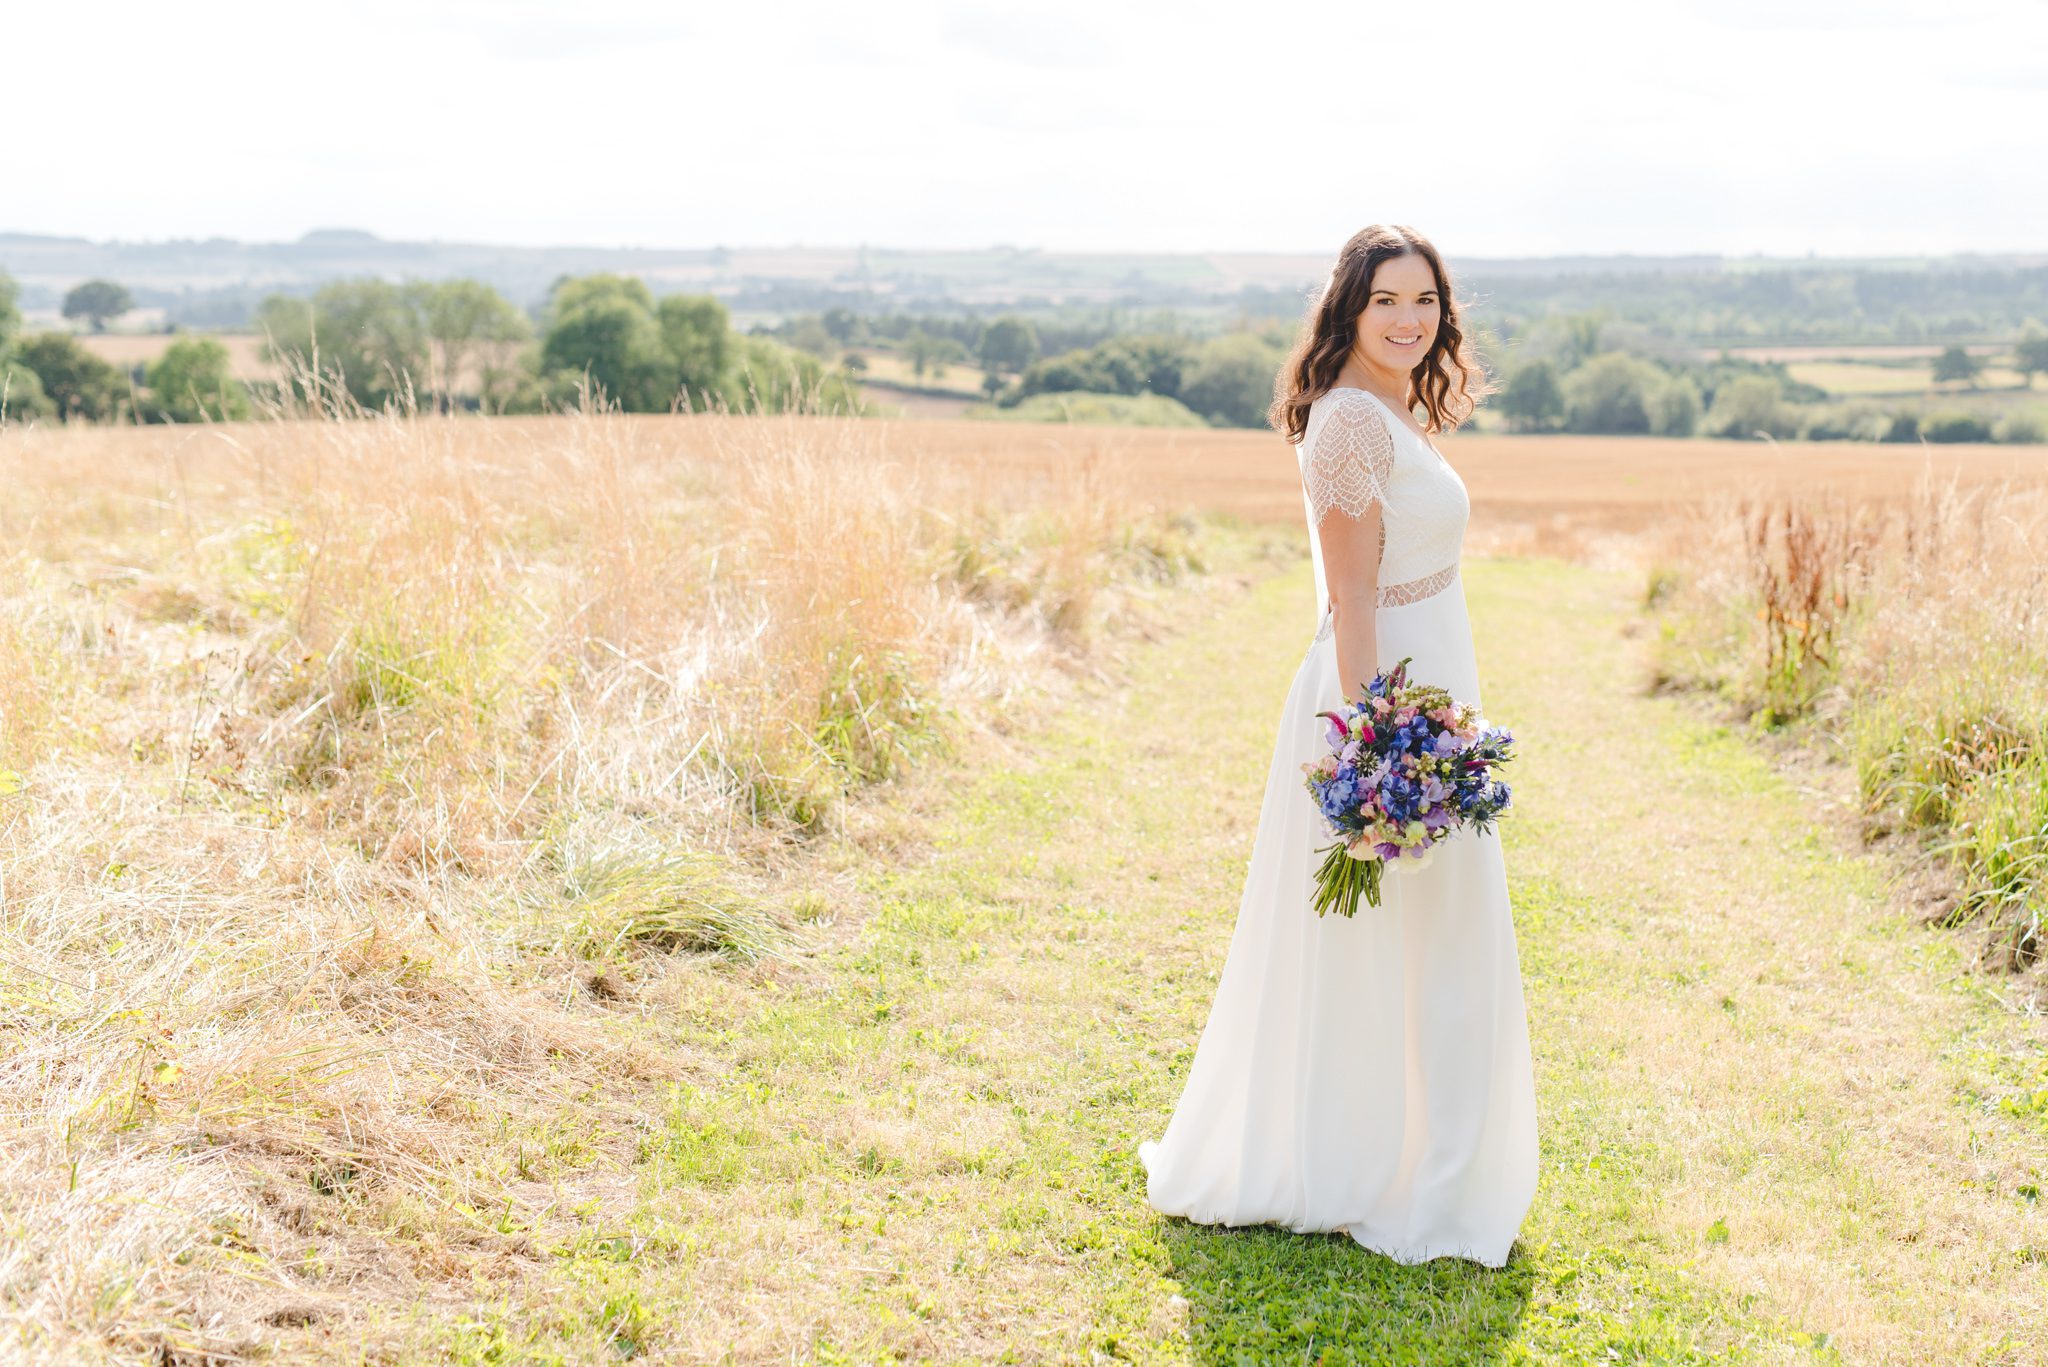 A bride standing in a field